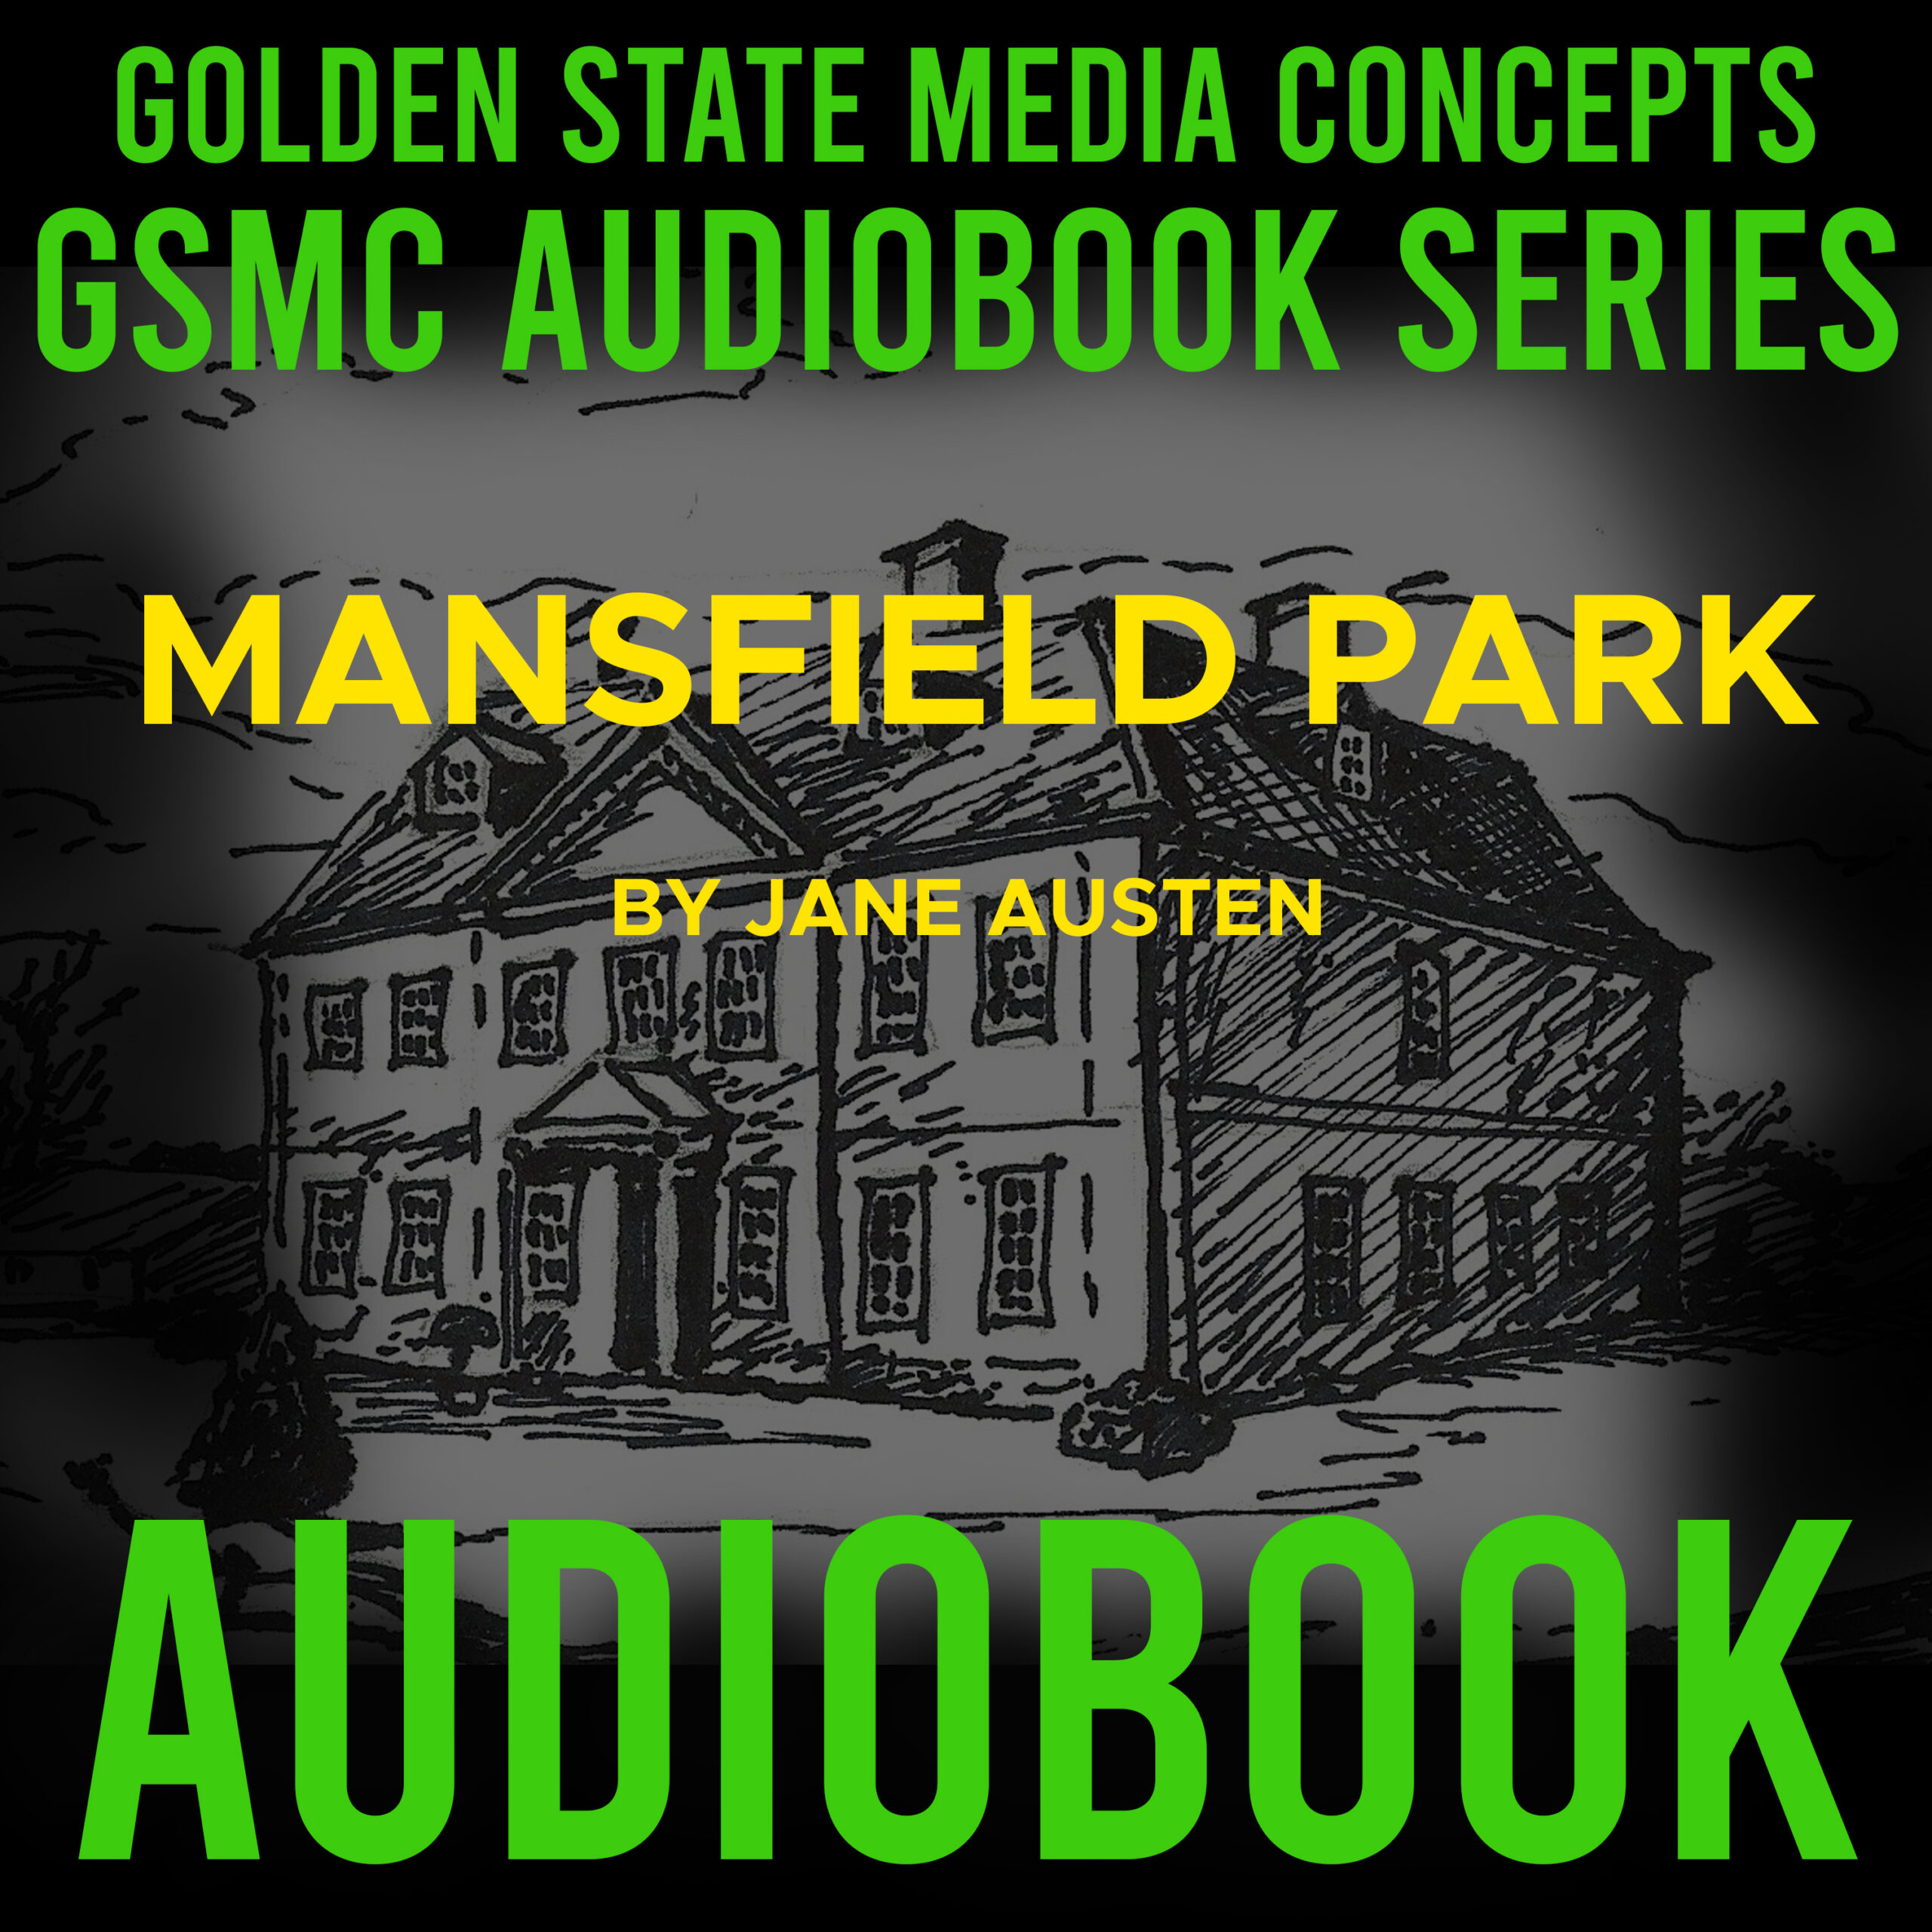 GSMC Audiobook Series: Mansfield Park by Jane Austen